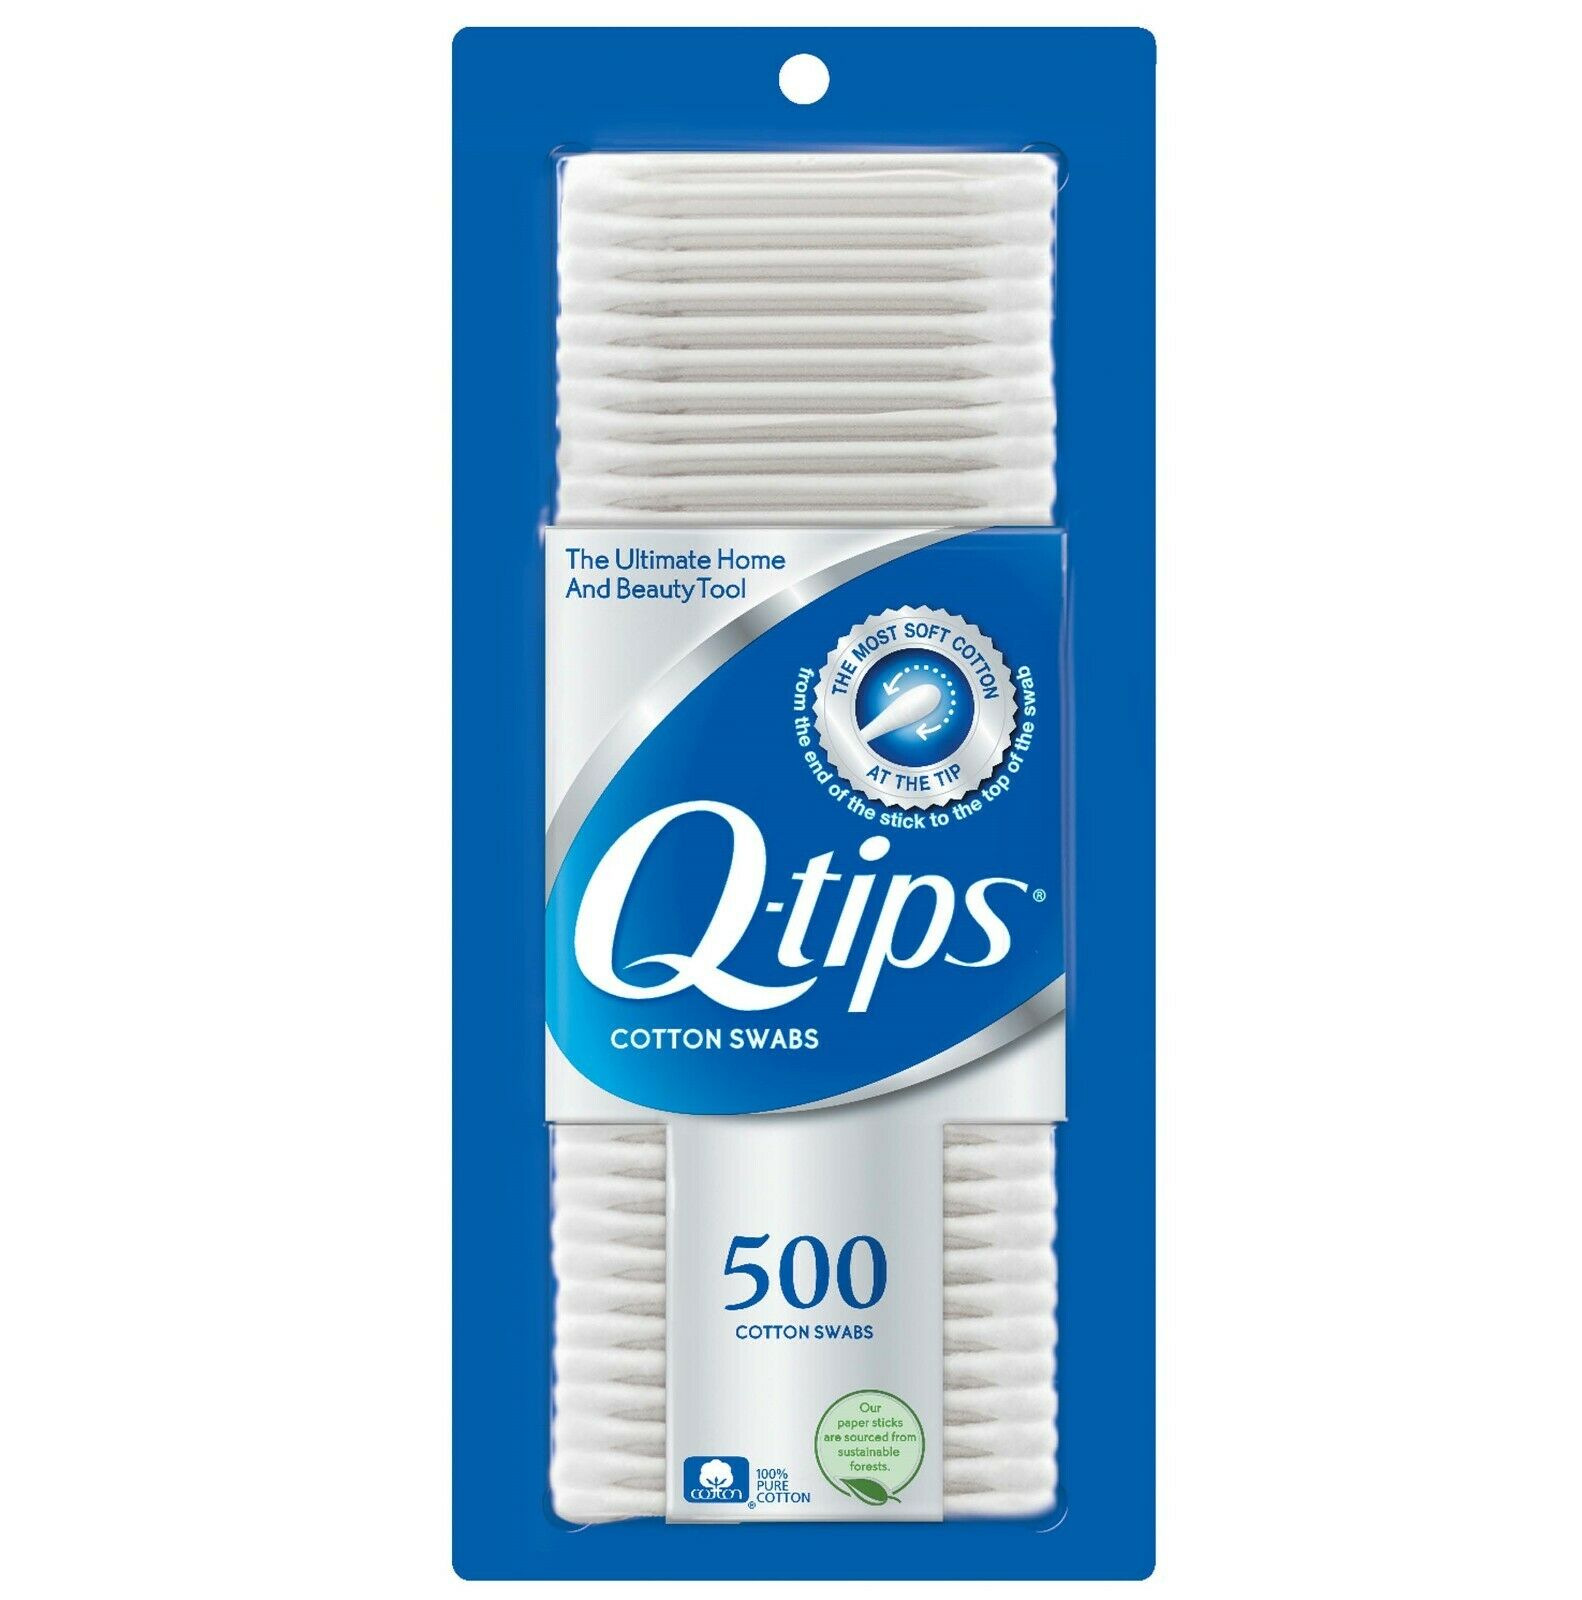 Q Tips Original Cotton Swabs 500 Count